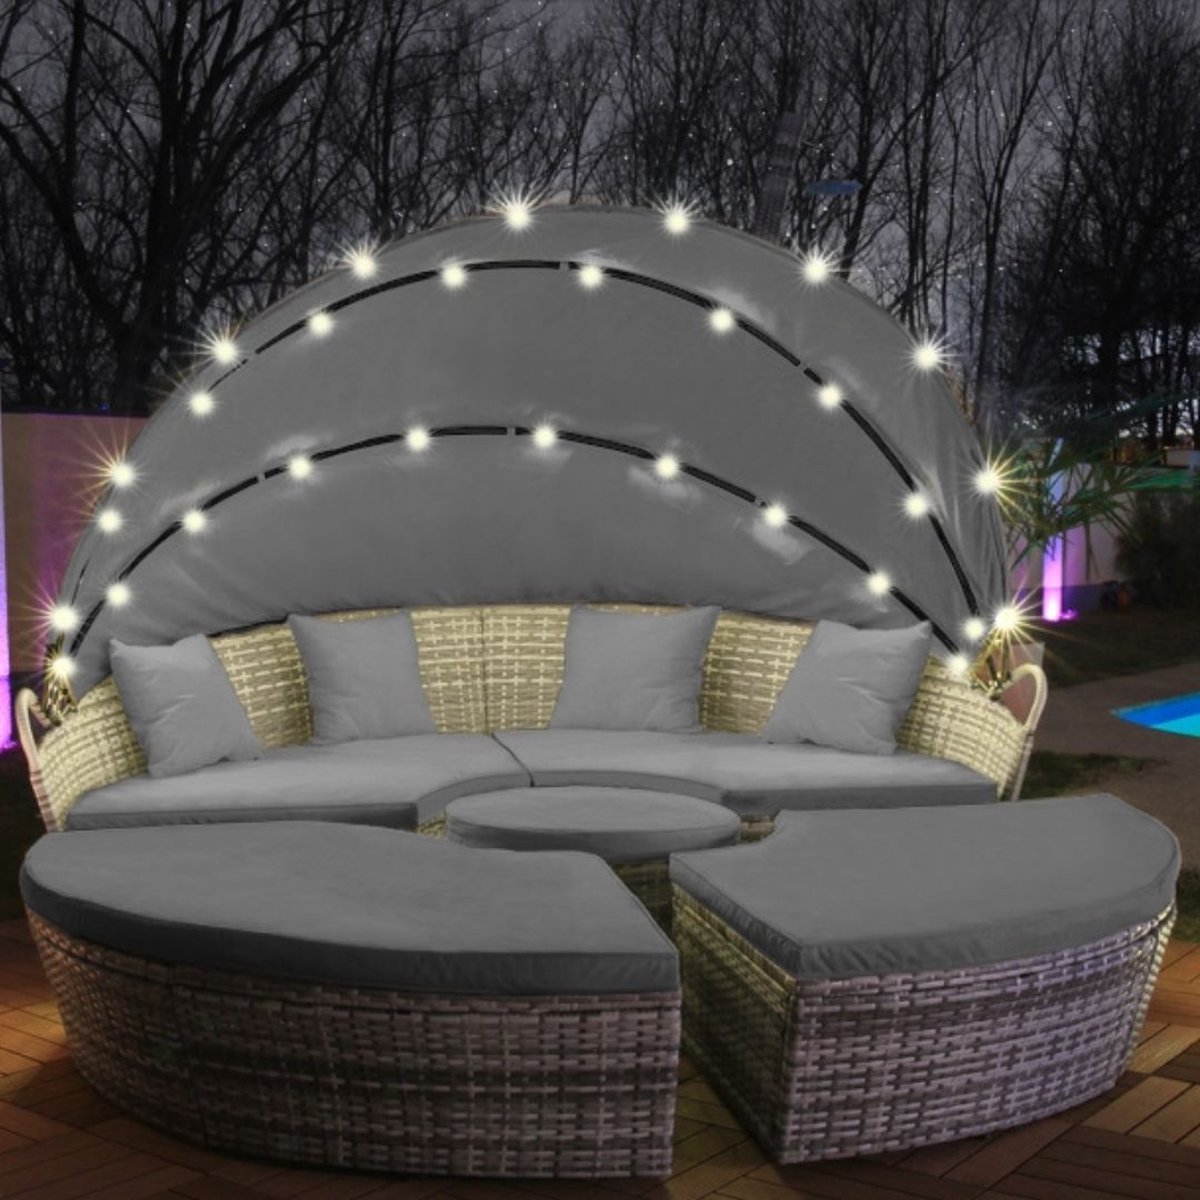 Elfida - Polyrattan Lounge eiland - 180cm - Met Solar LED verlichting - Inclusief kussens - UV bestendig - Grijs